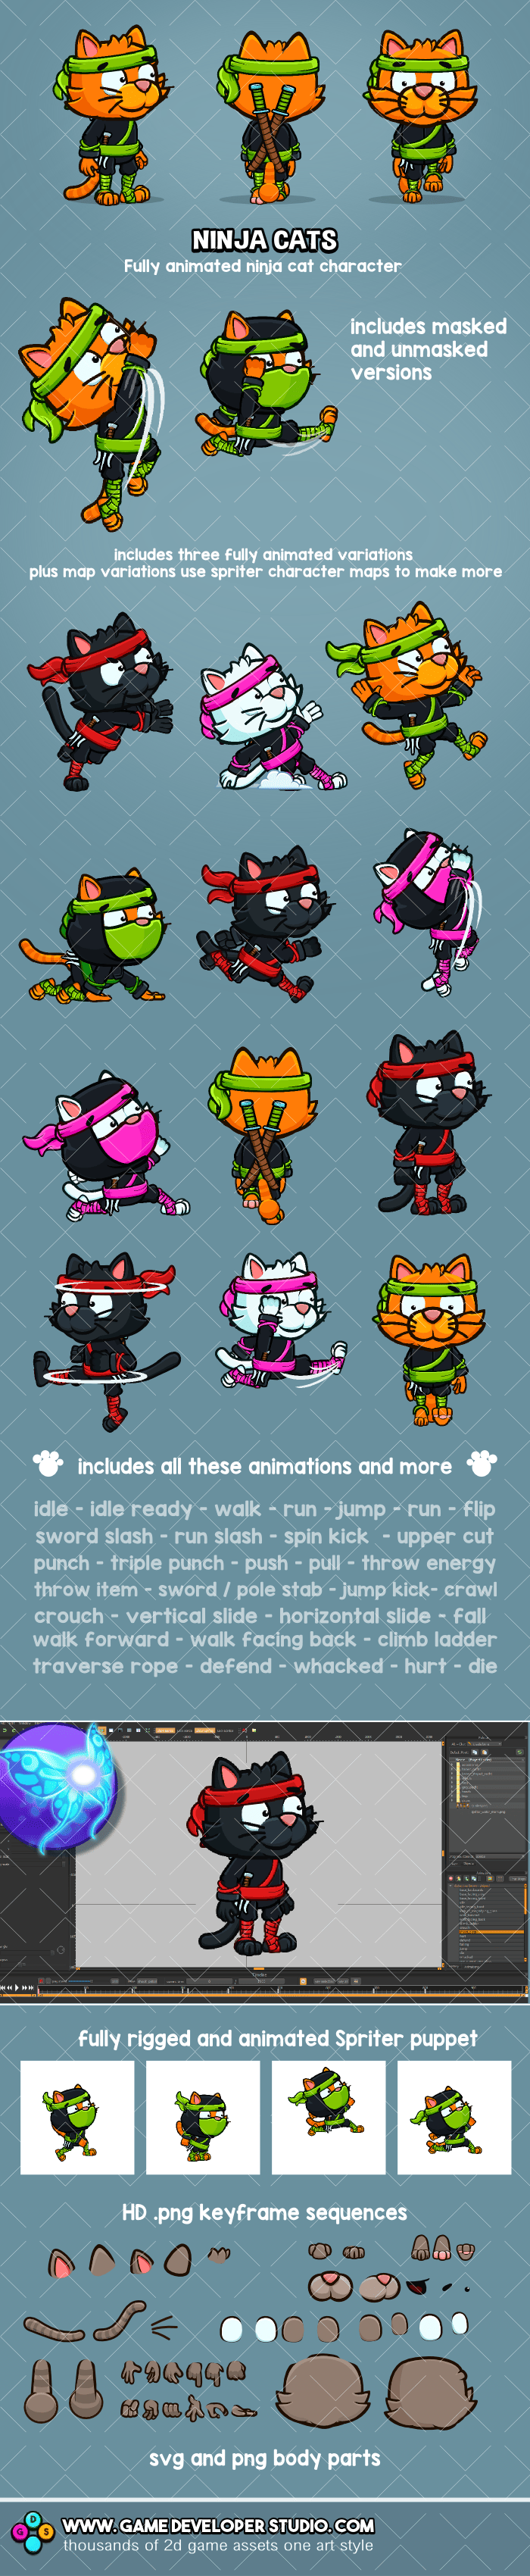 Ninja cat animated game sprite character